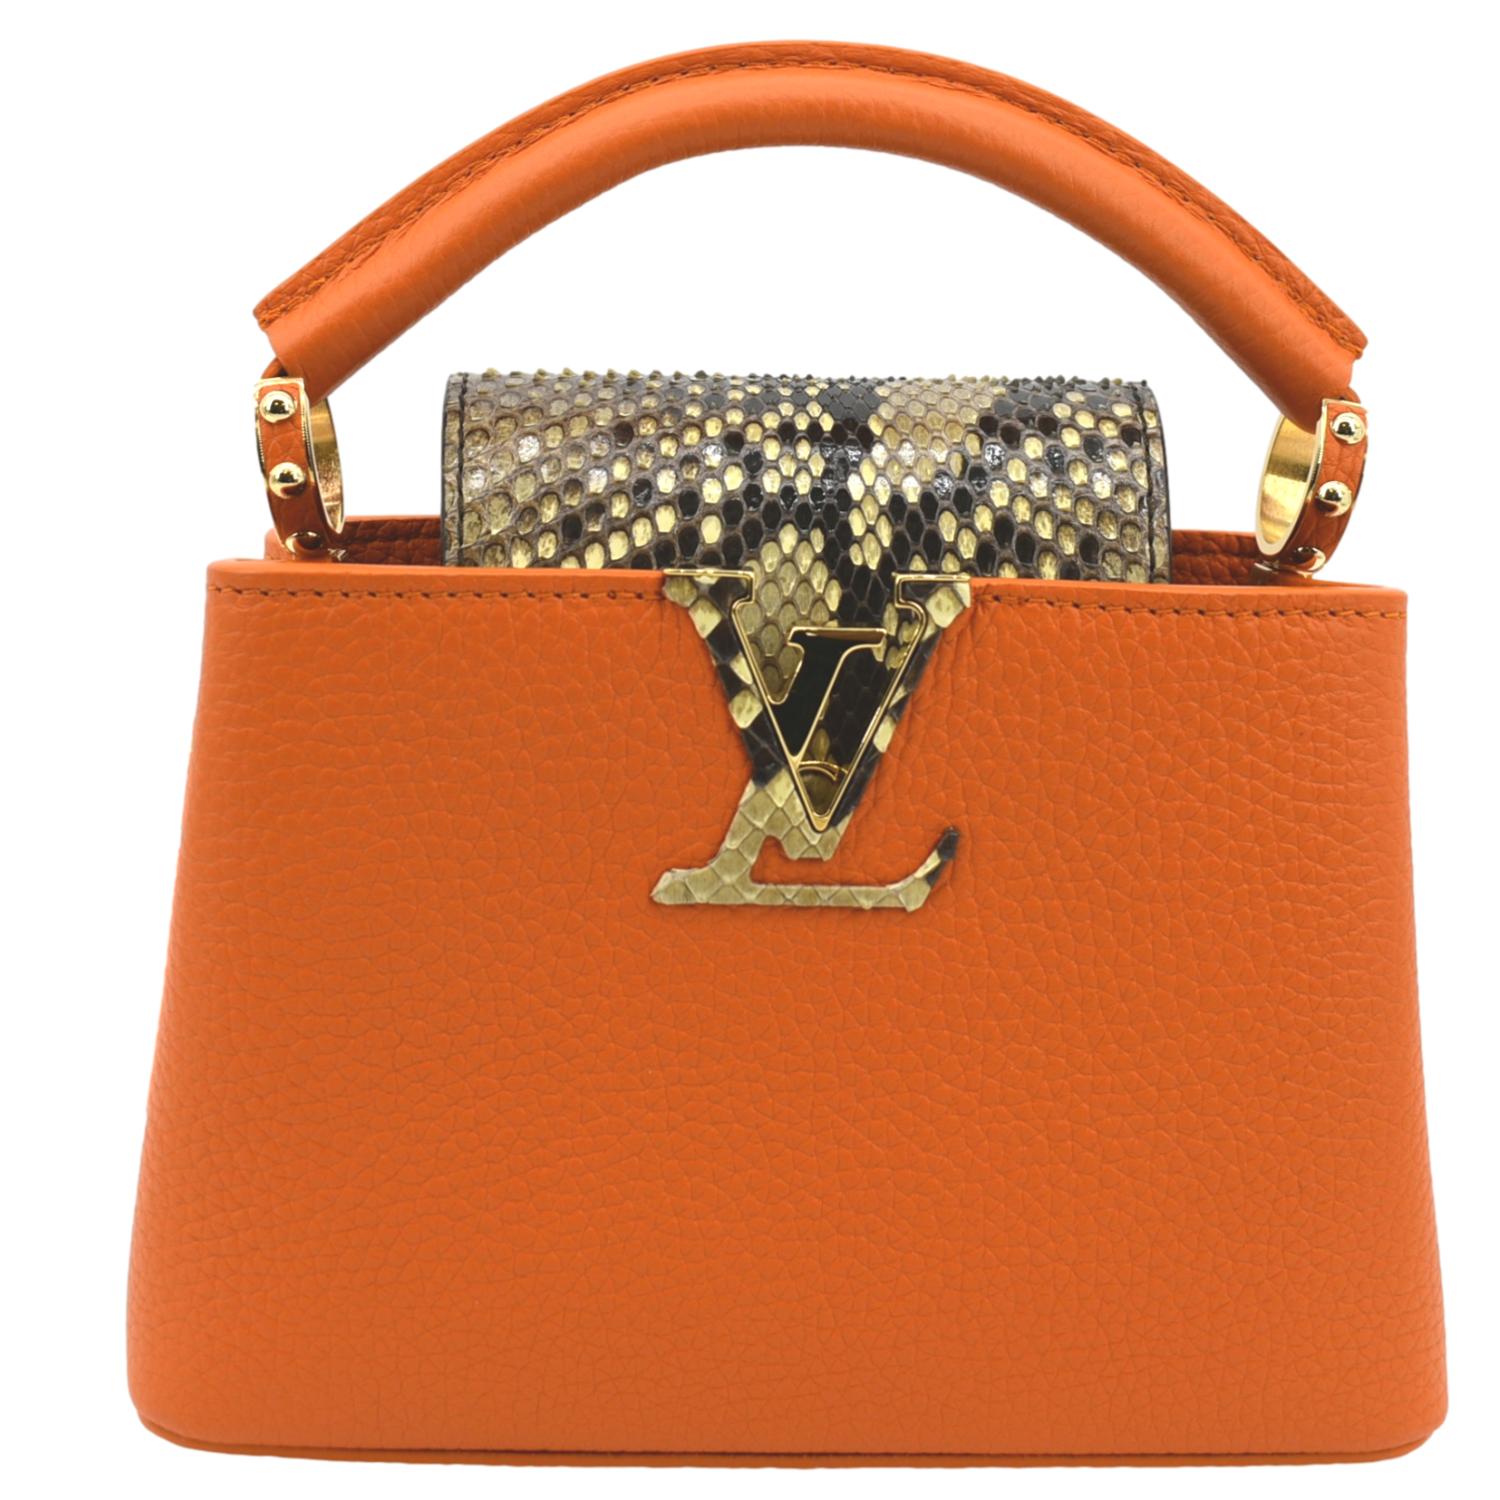 Louis Vuitton Capucines Handbag